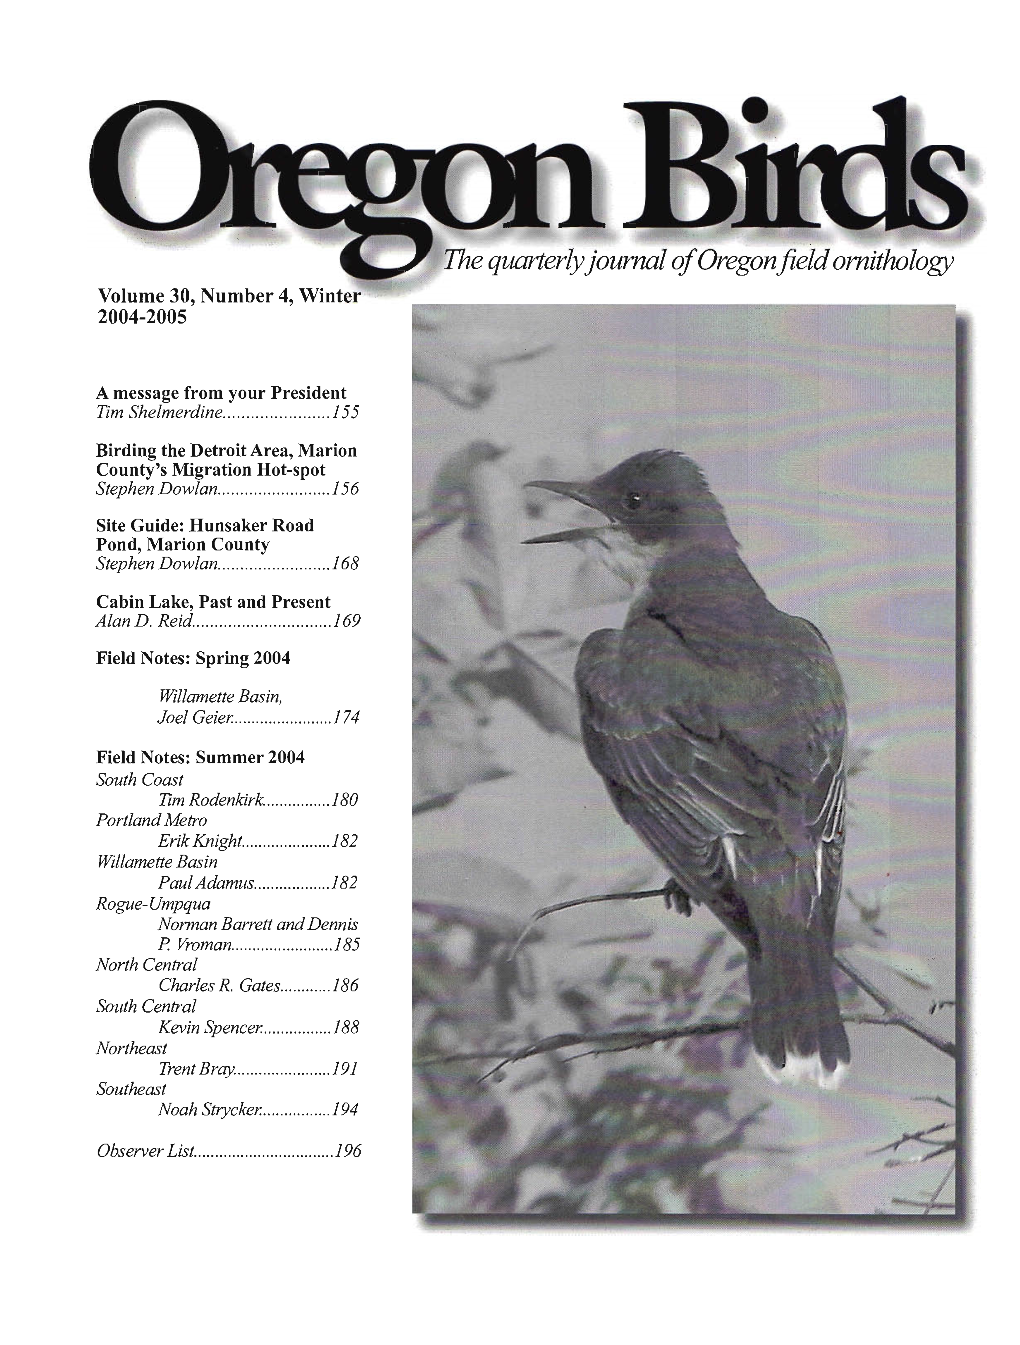 The Quarterlyjournal of Oregonfield Ornithology Volume 30, Number 4, Winter 2004-2005